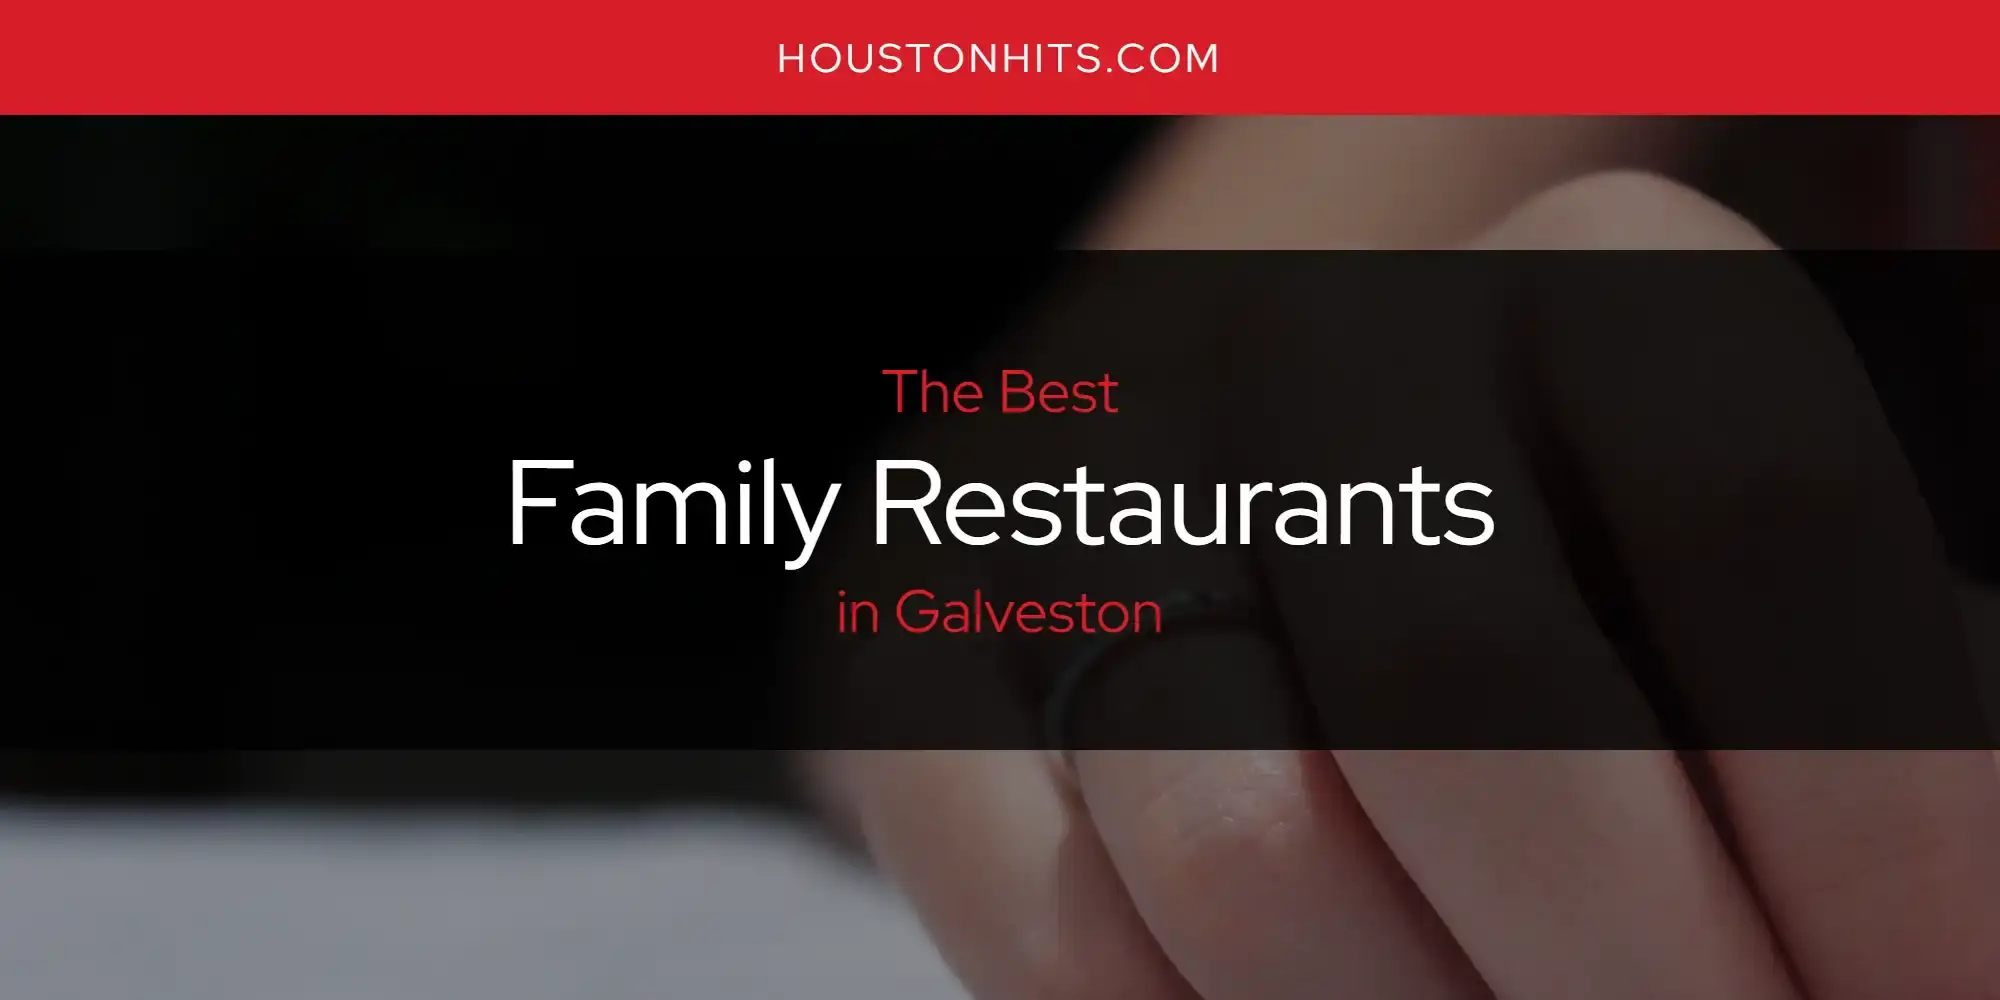 Best Family Restaurants in Galveston? Here's the Top 17